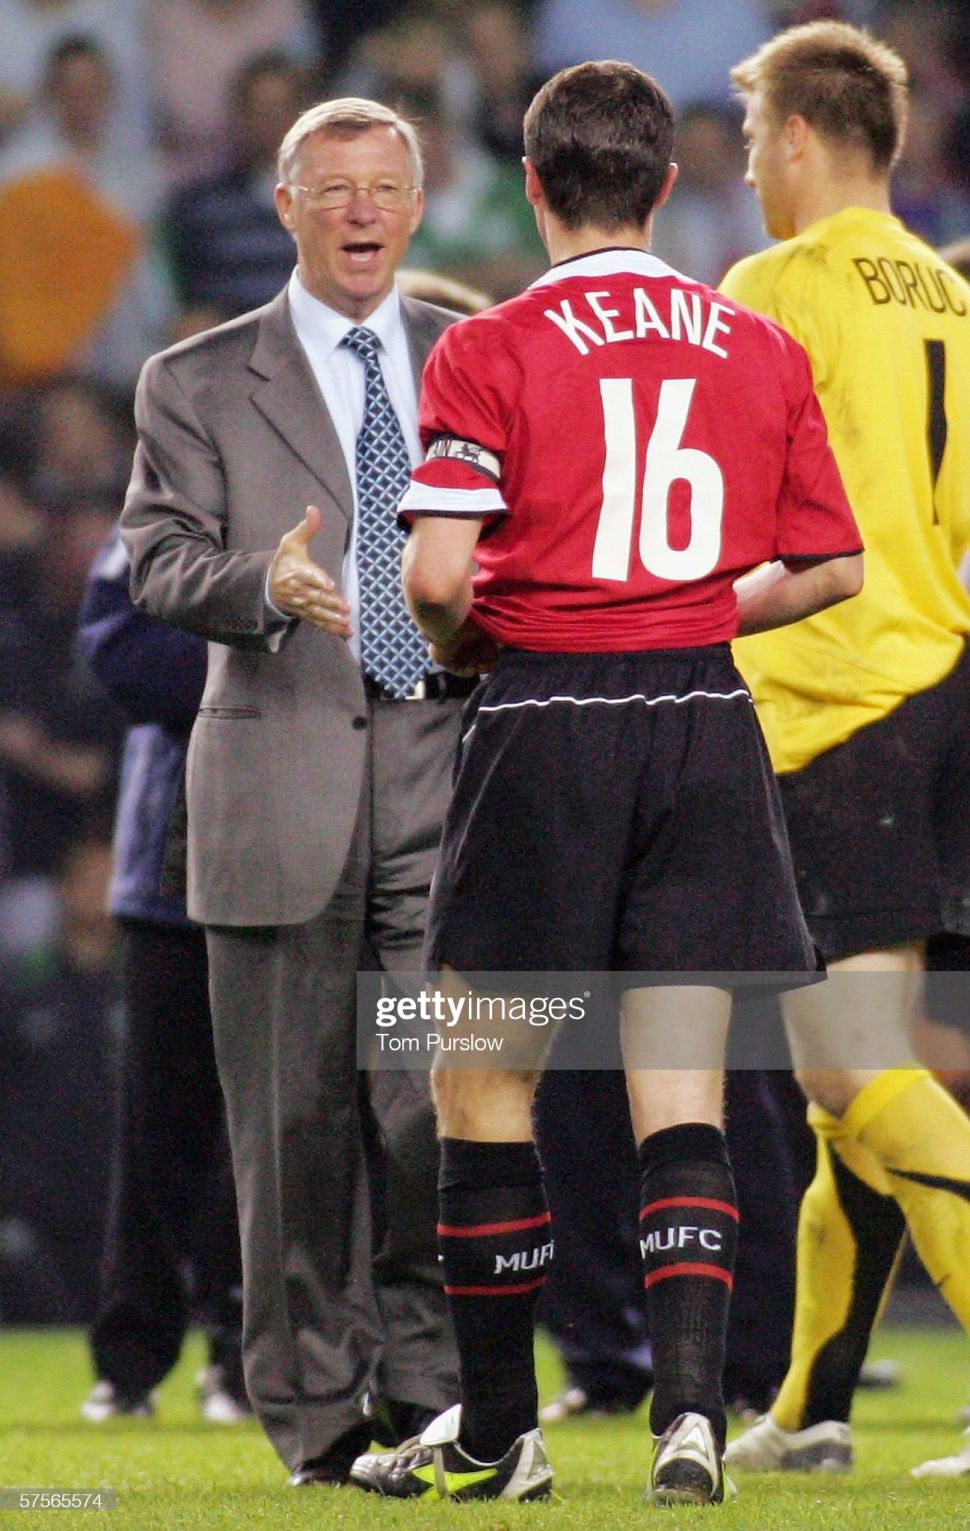 Áo đấu Keane 16 testimonial Manchester United 2006 home shirt jersey